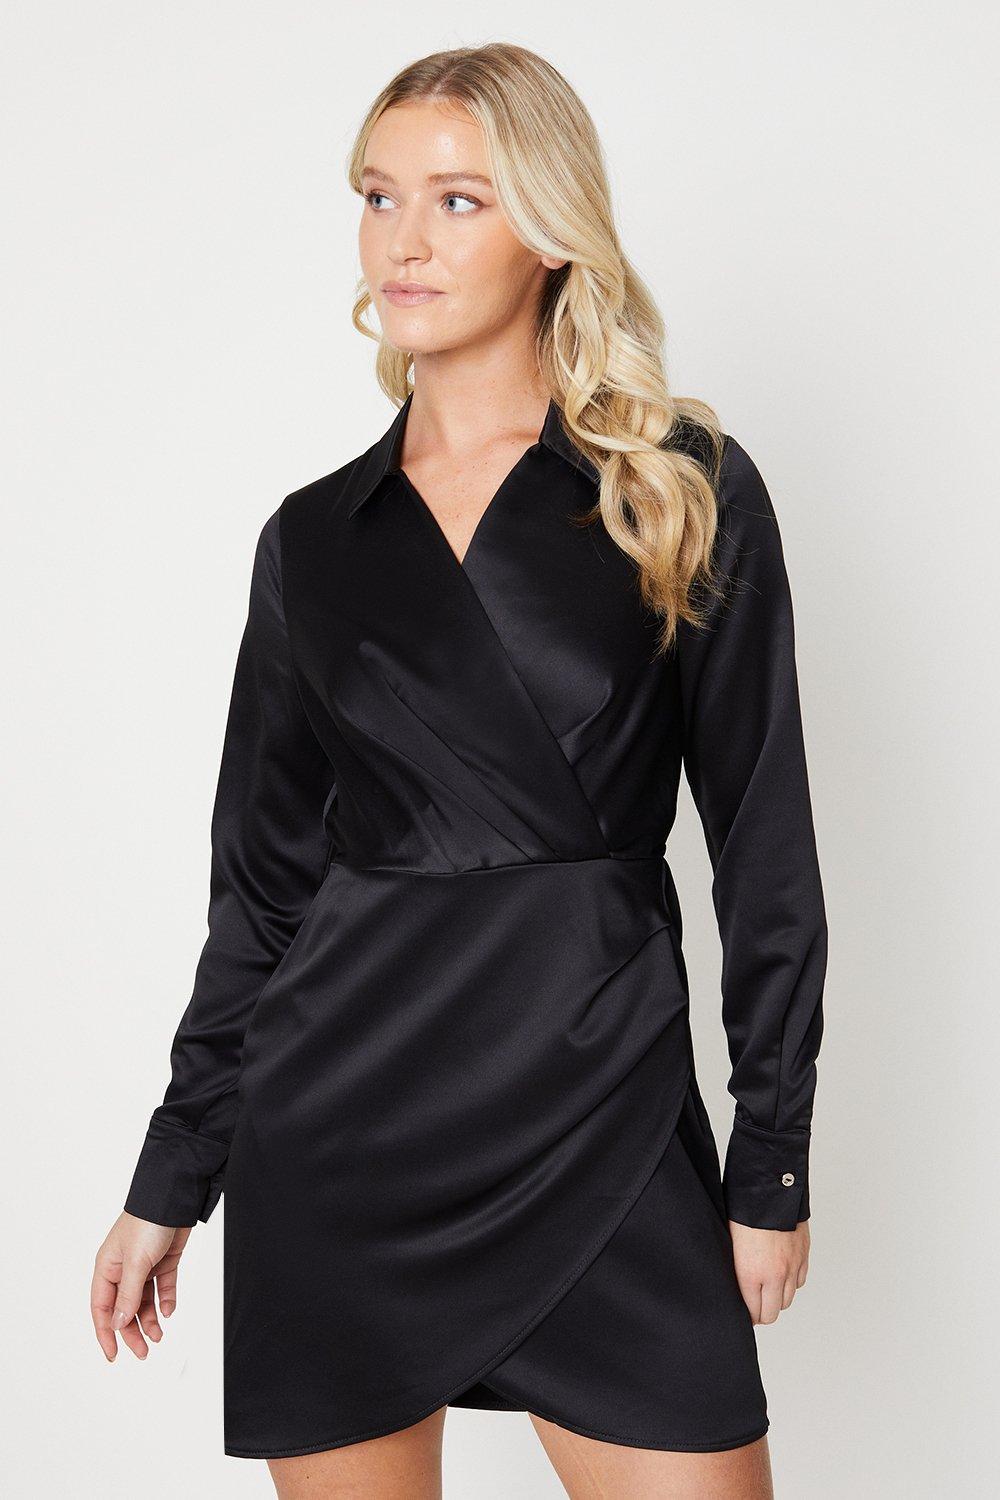 Women’s Black Wrap Over Ruched Mini Dress - 14